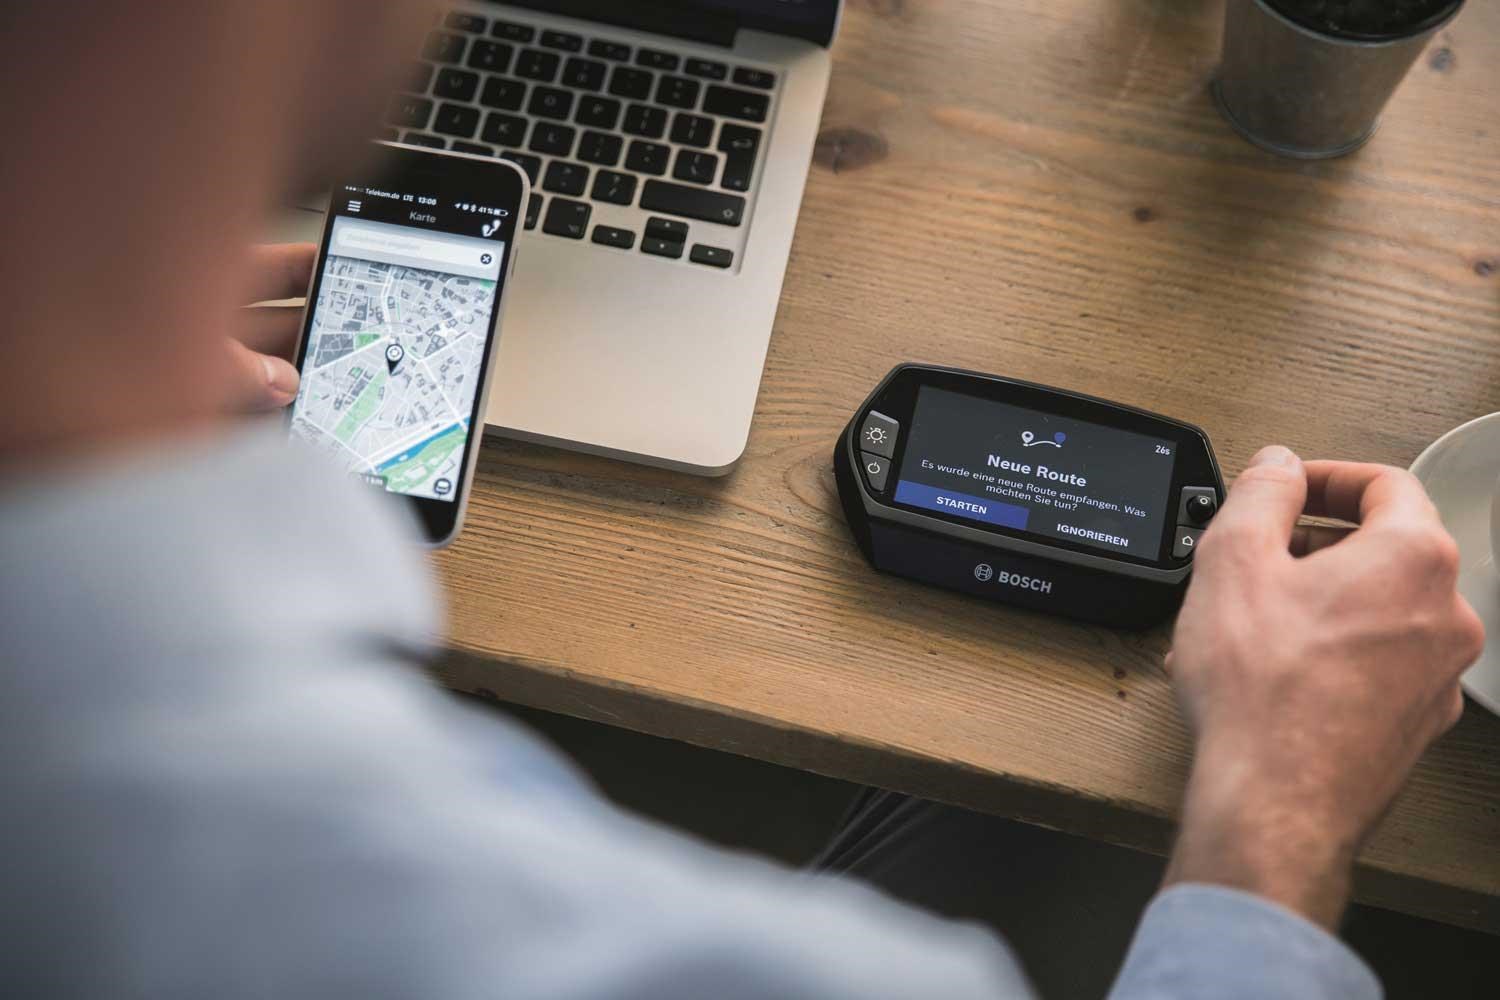 Bosch e bike display and smart phone